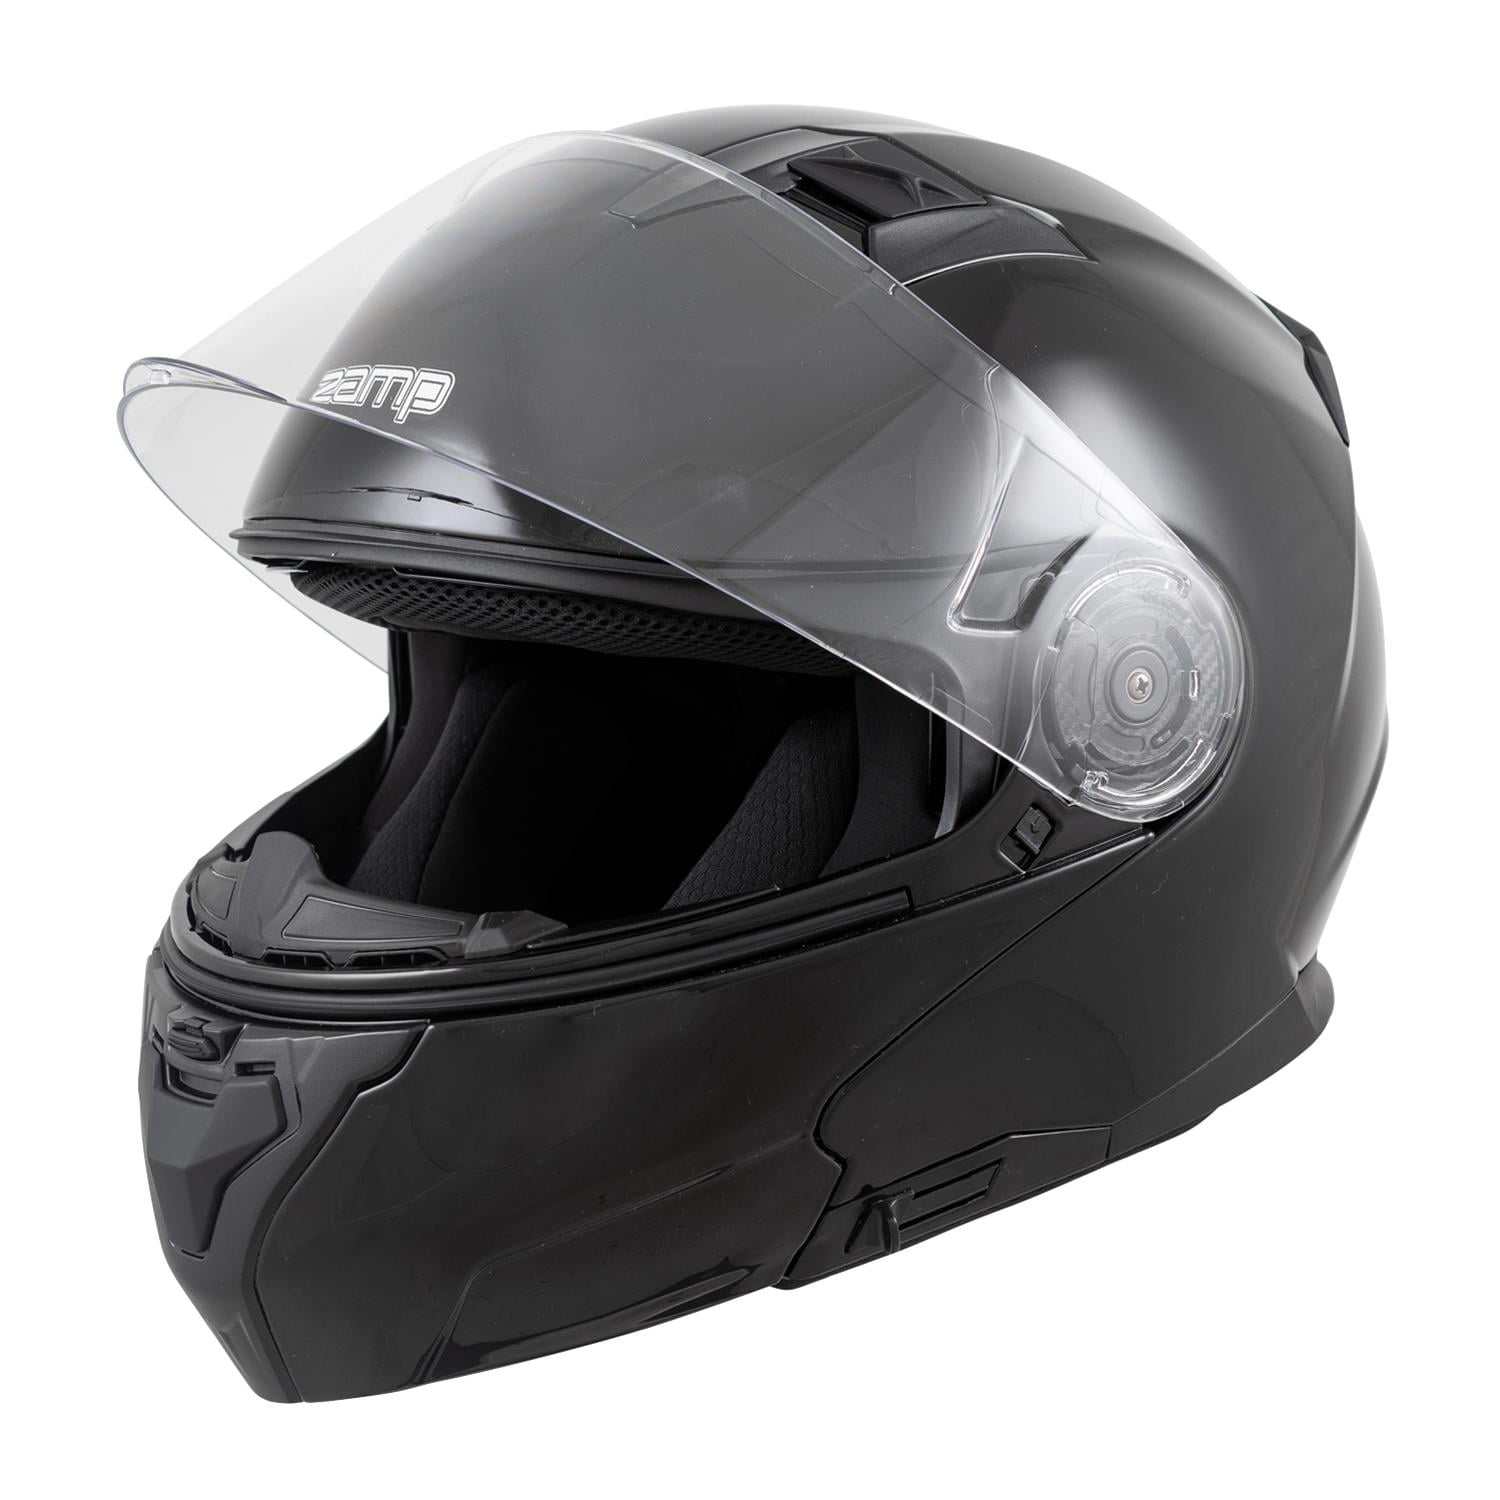 Brand:Leopard Children Kids Motocross Full Face Motorbike Helmet Off Road ECE-2205 Approved